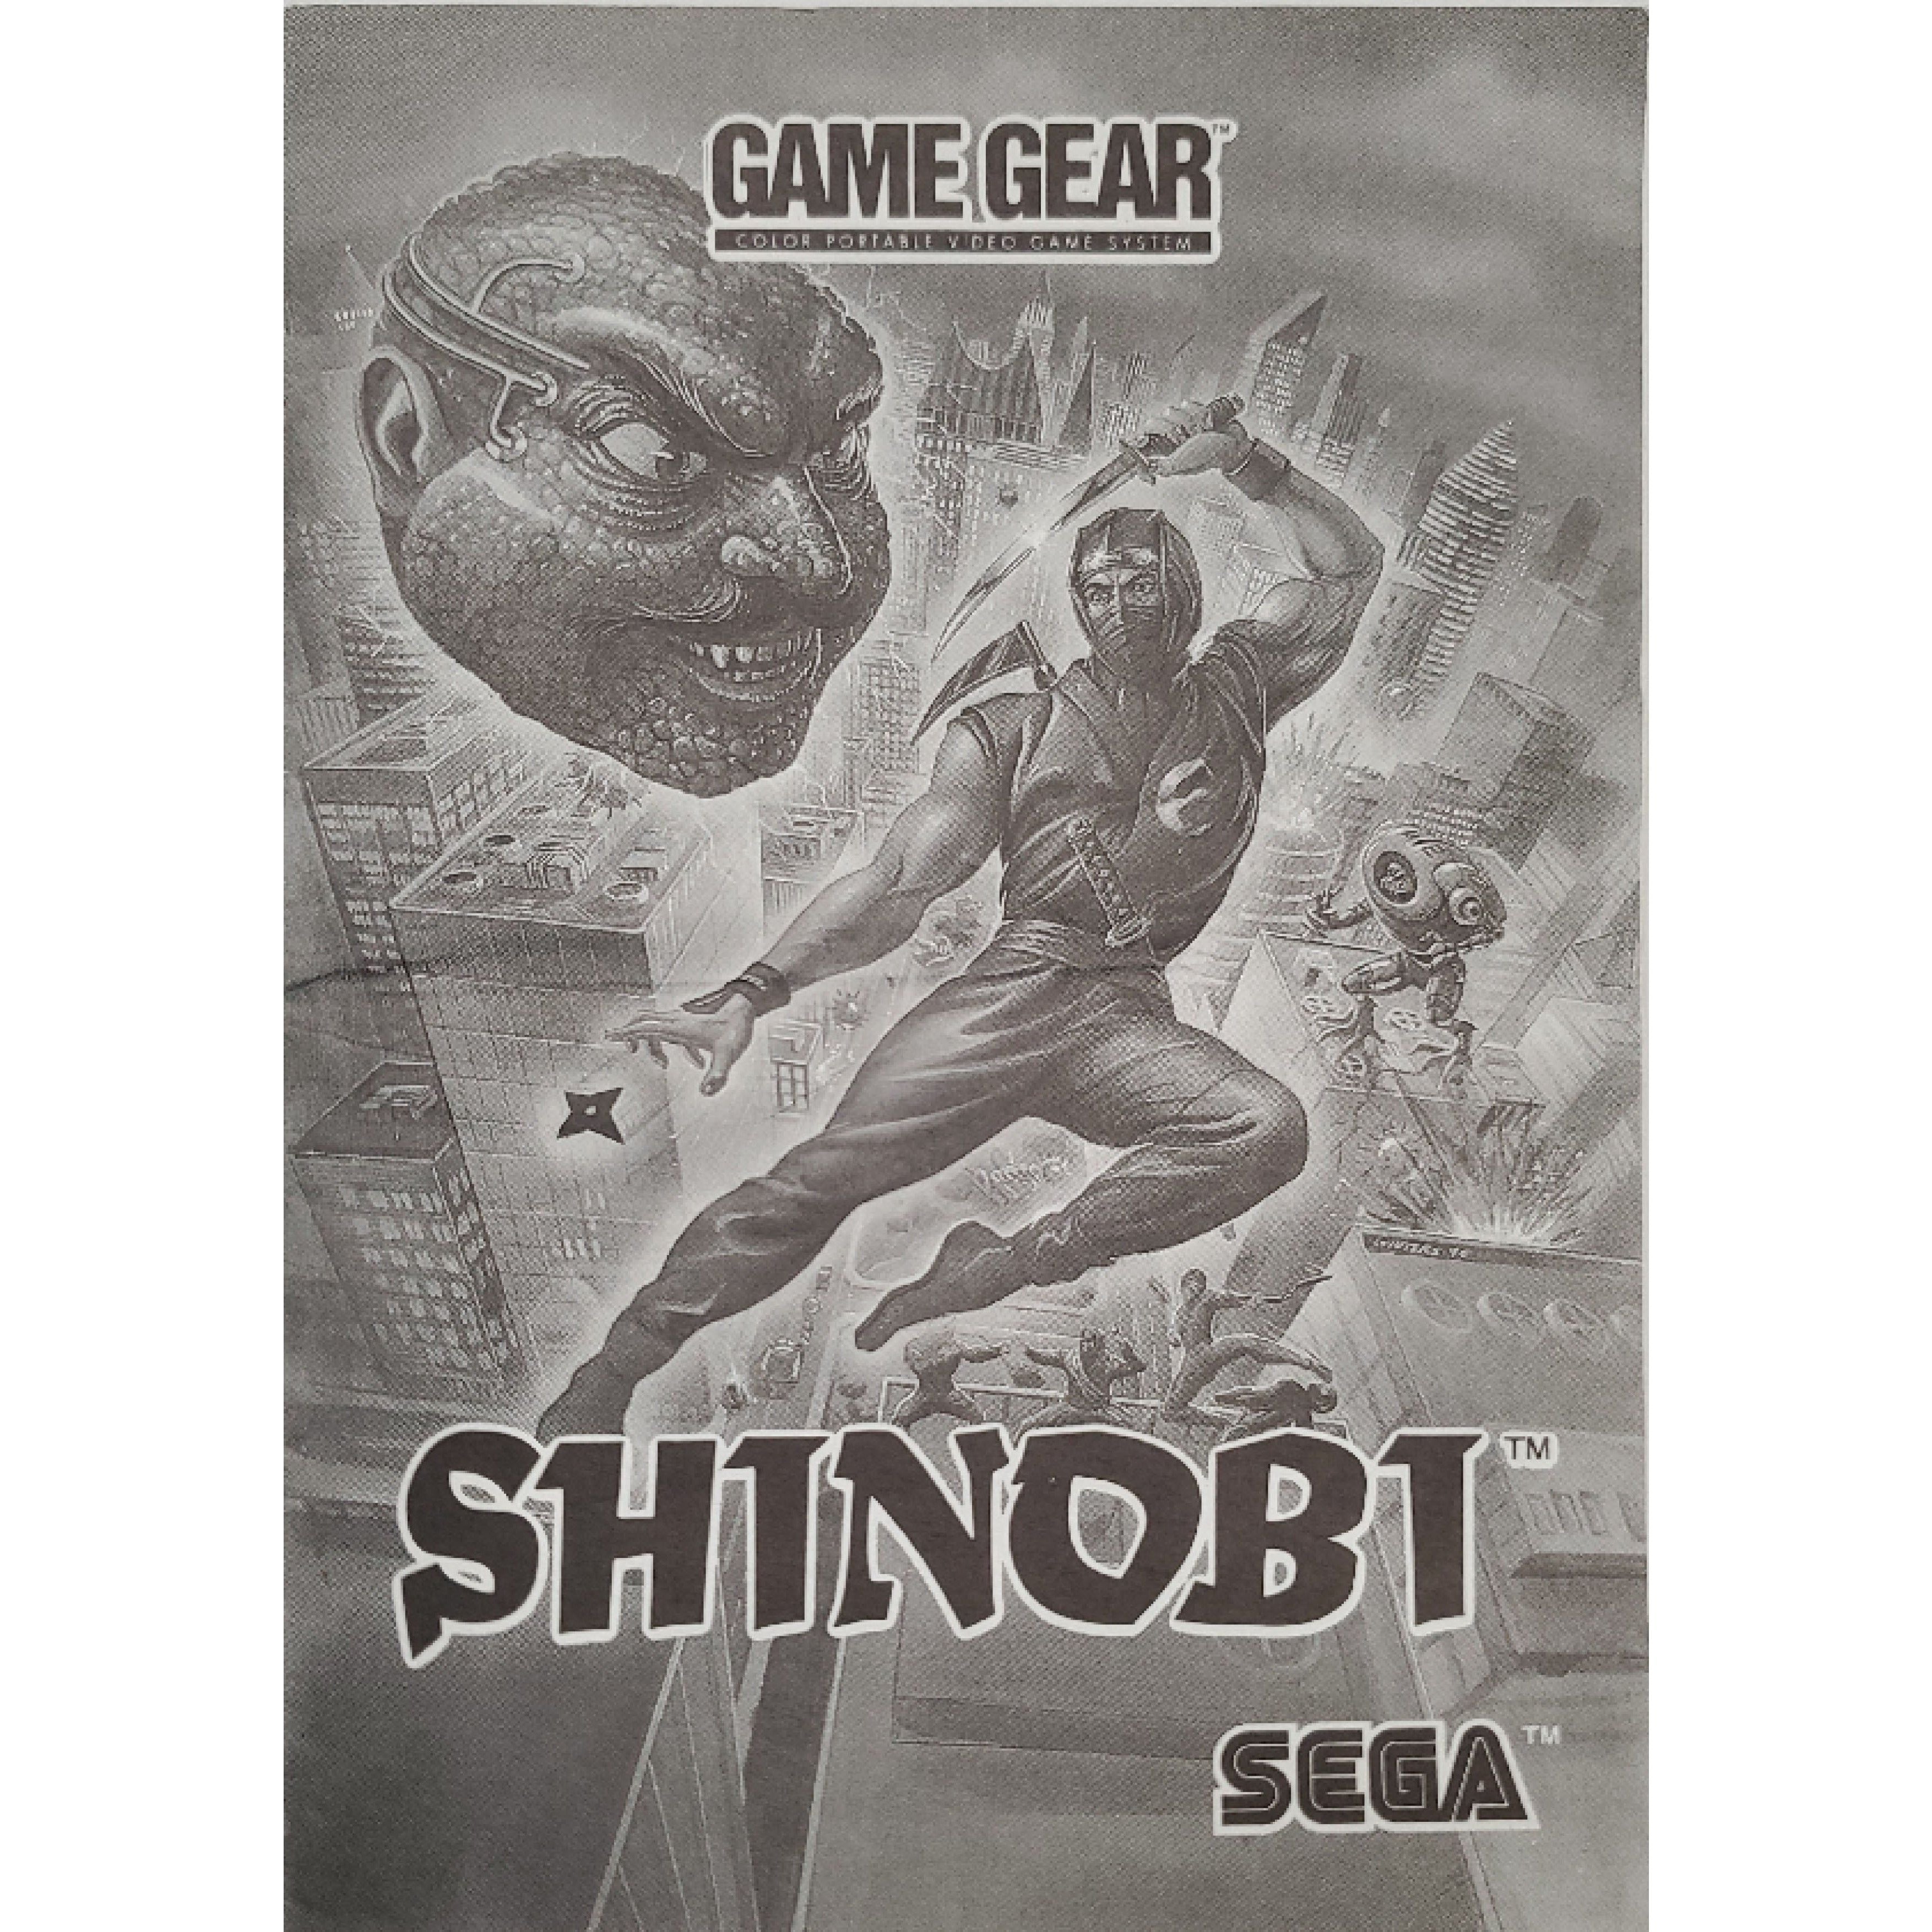 GameGear - Shinobi (Manuel monochrome)